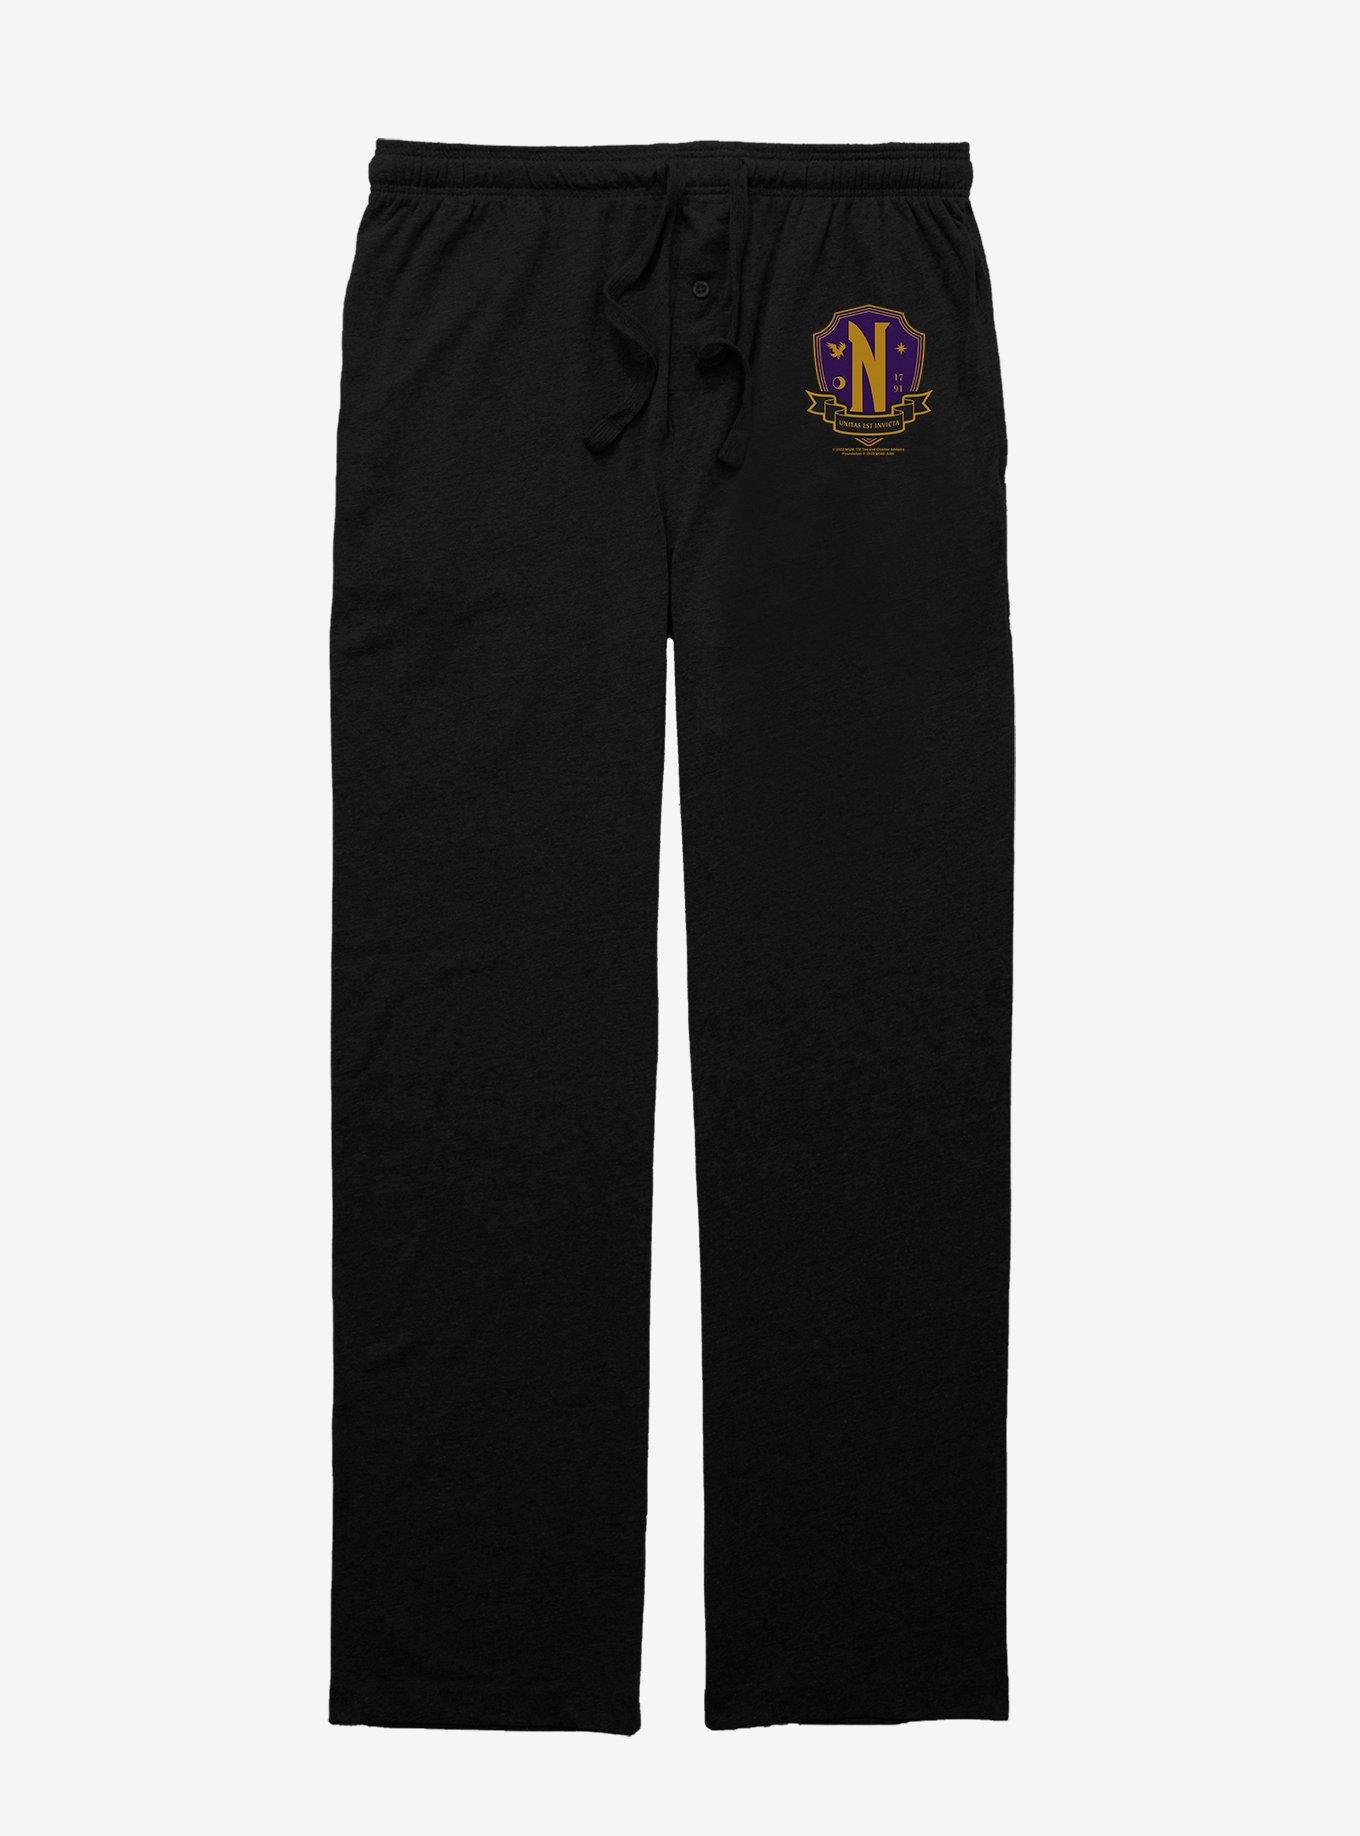 Wednesday Nevermore Academy Crest Pajama Pants, BLACK, hi-res